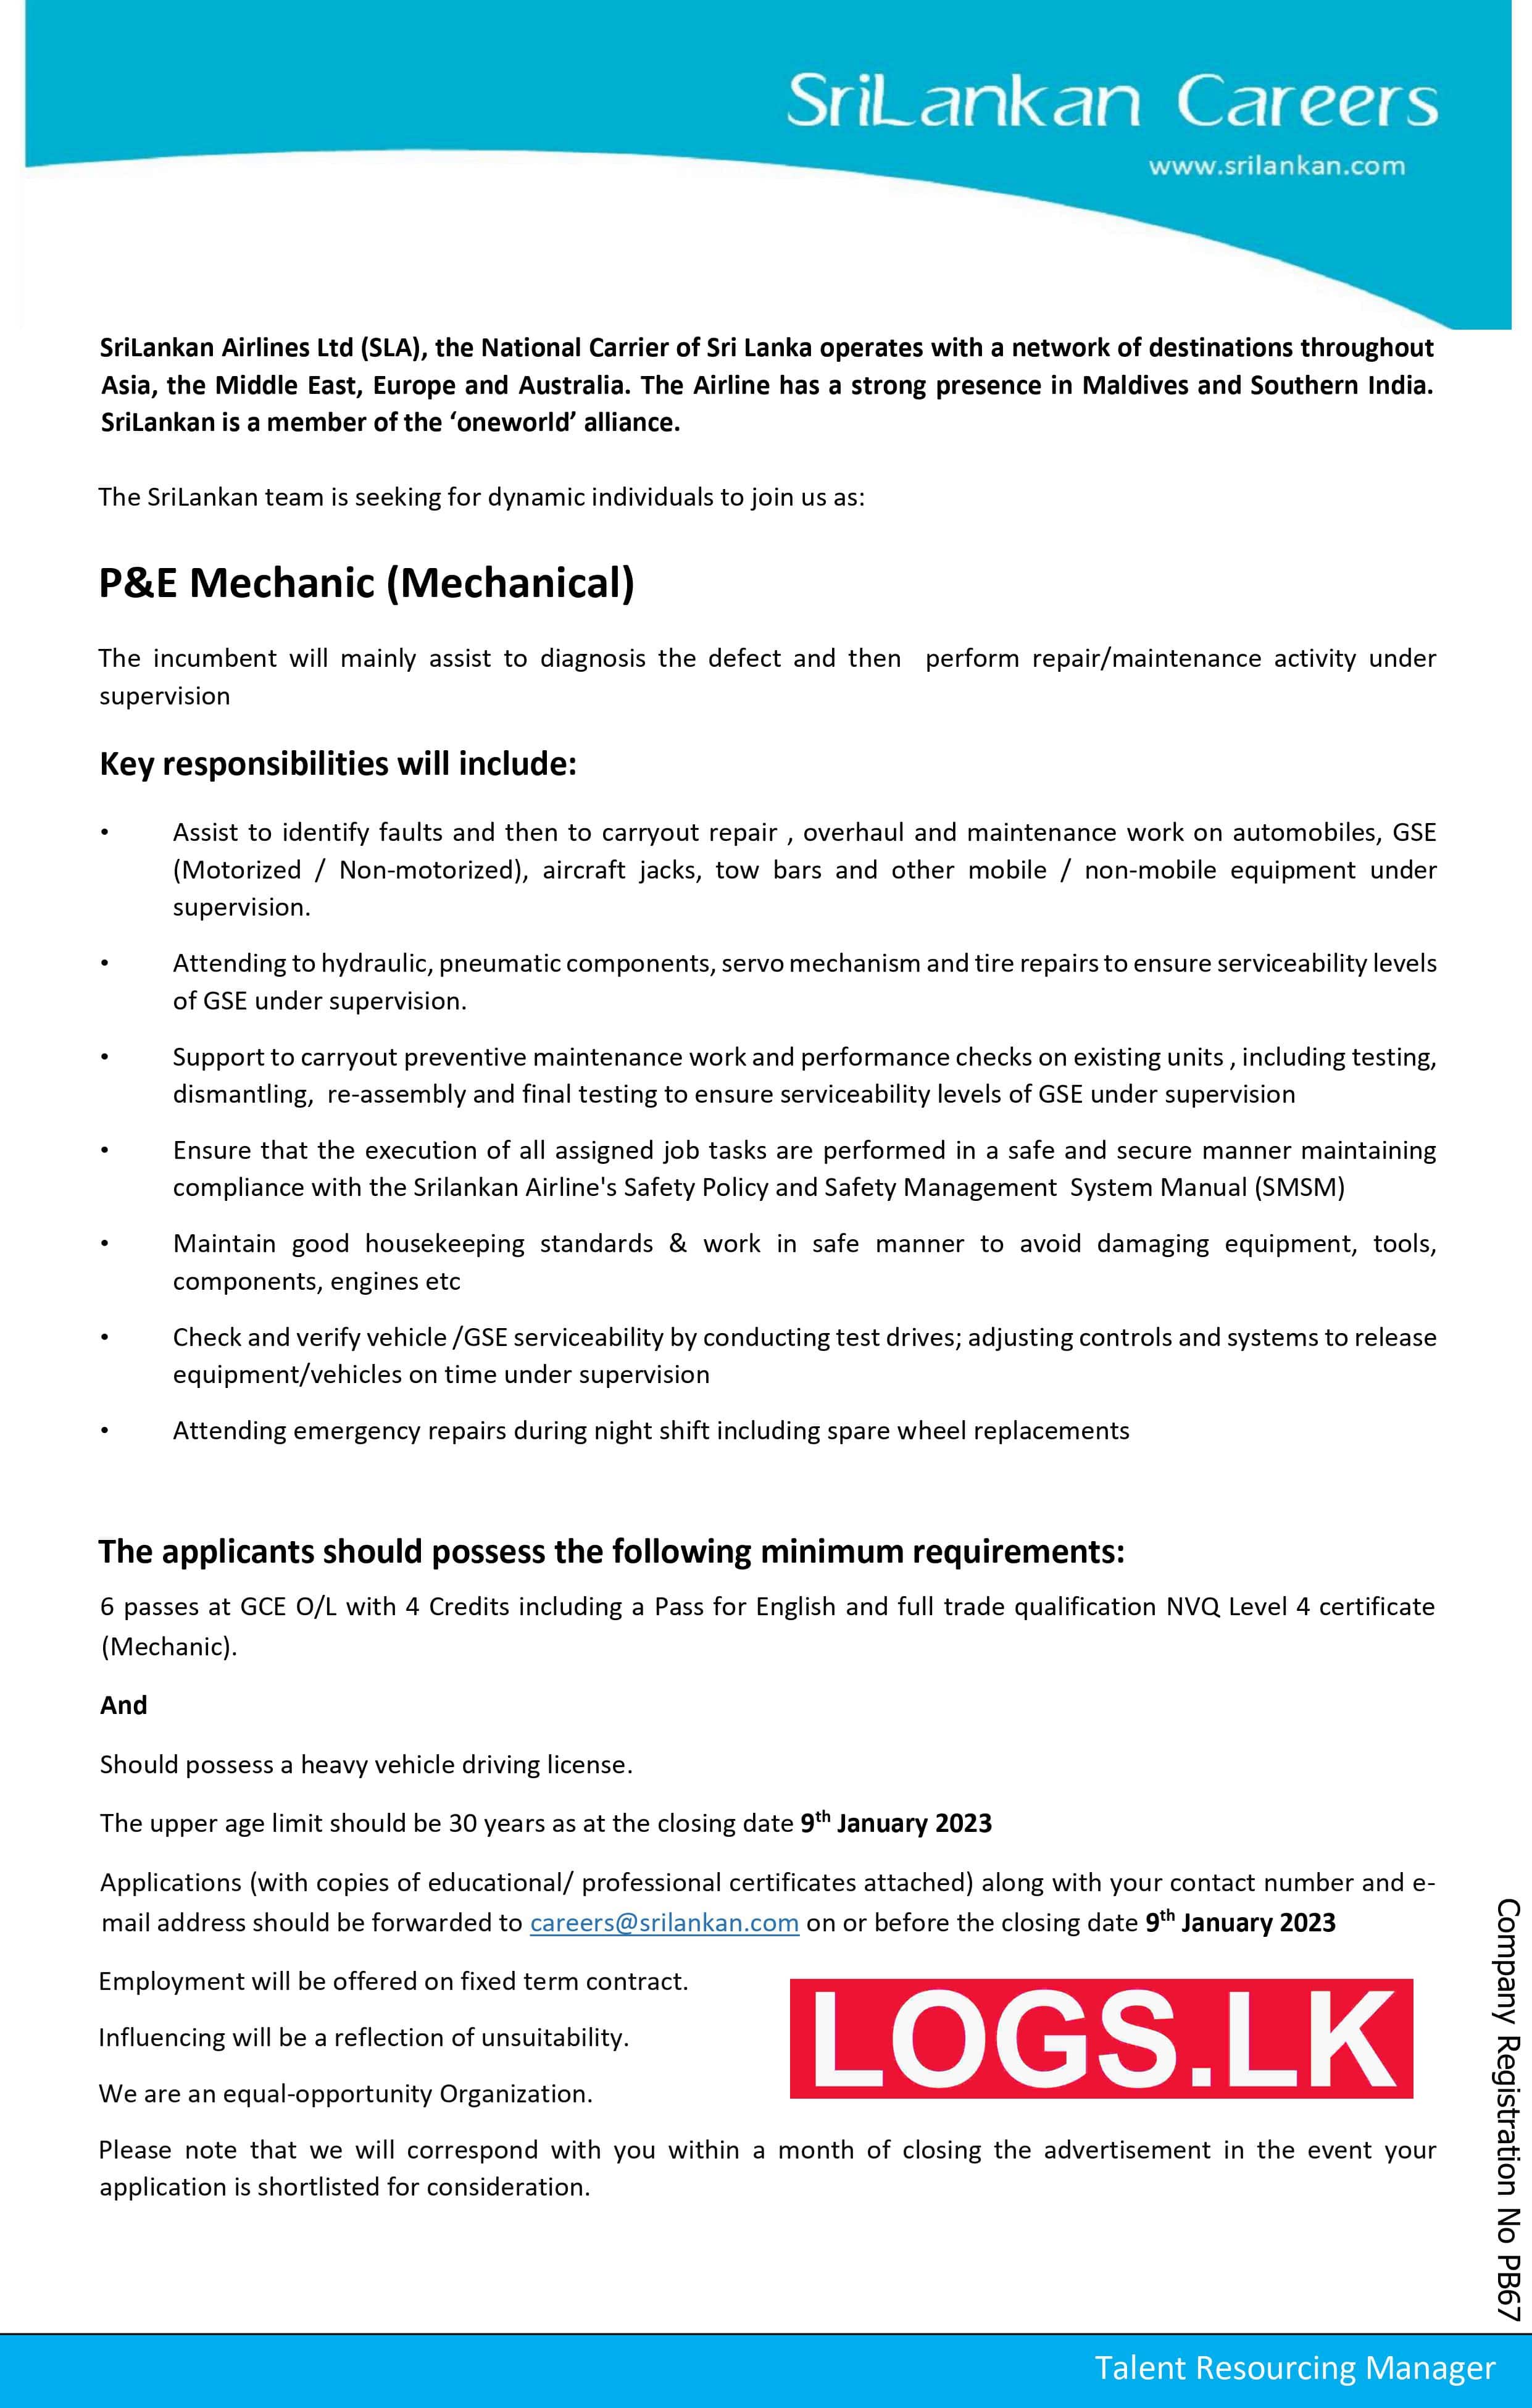 P&E Mechanic (Mechanical) - Sri Lankan Airlines Vacancies 2023 Apply Online. Download Application Form